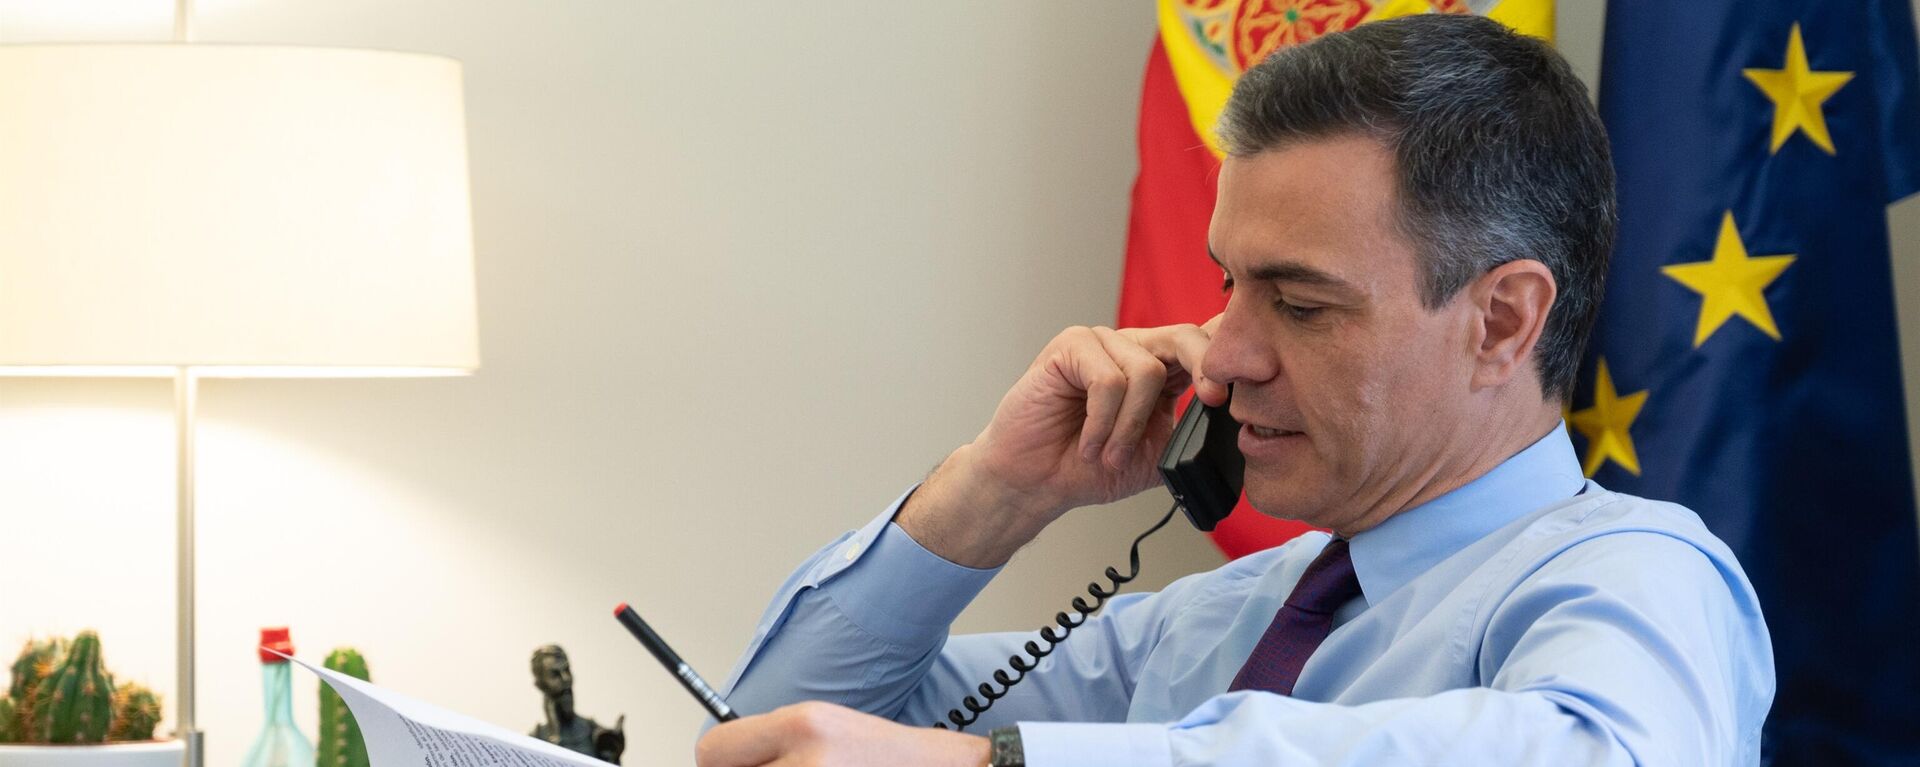 El presidente del Gobierno español, Pedro Sánchez, habla por teléfono - Sputnik Mundo, 1920, 08.06.2021